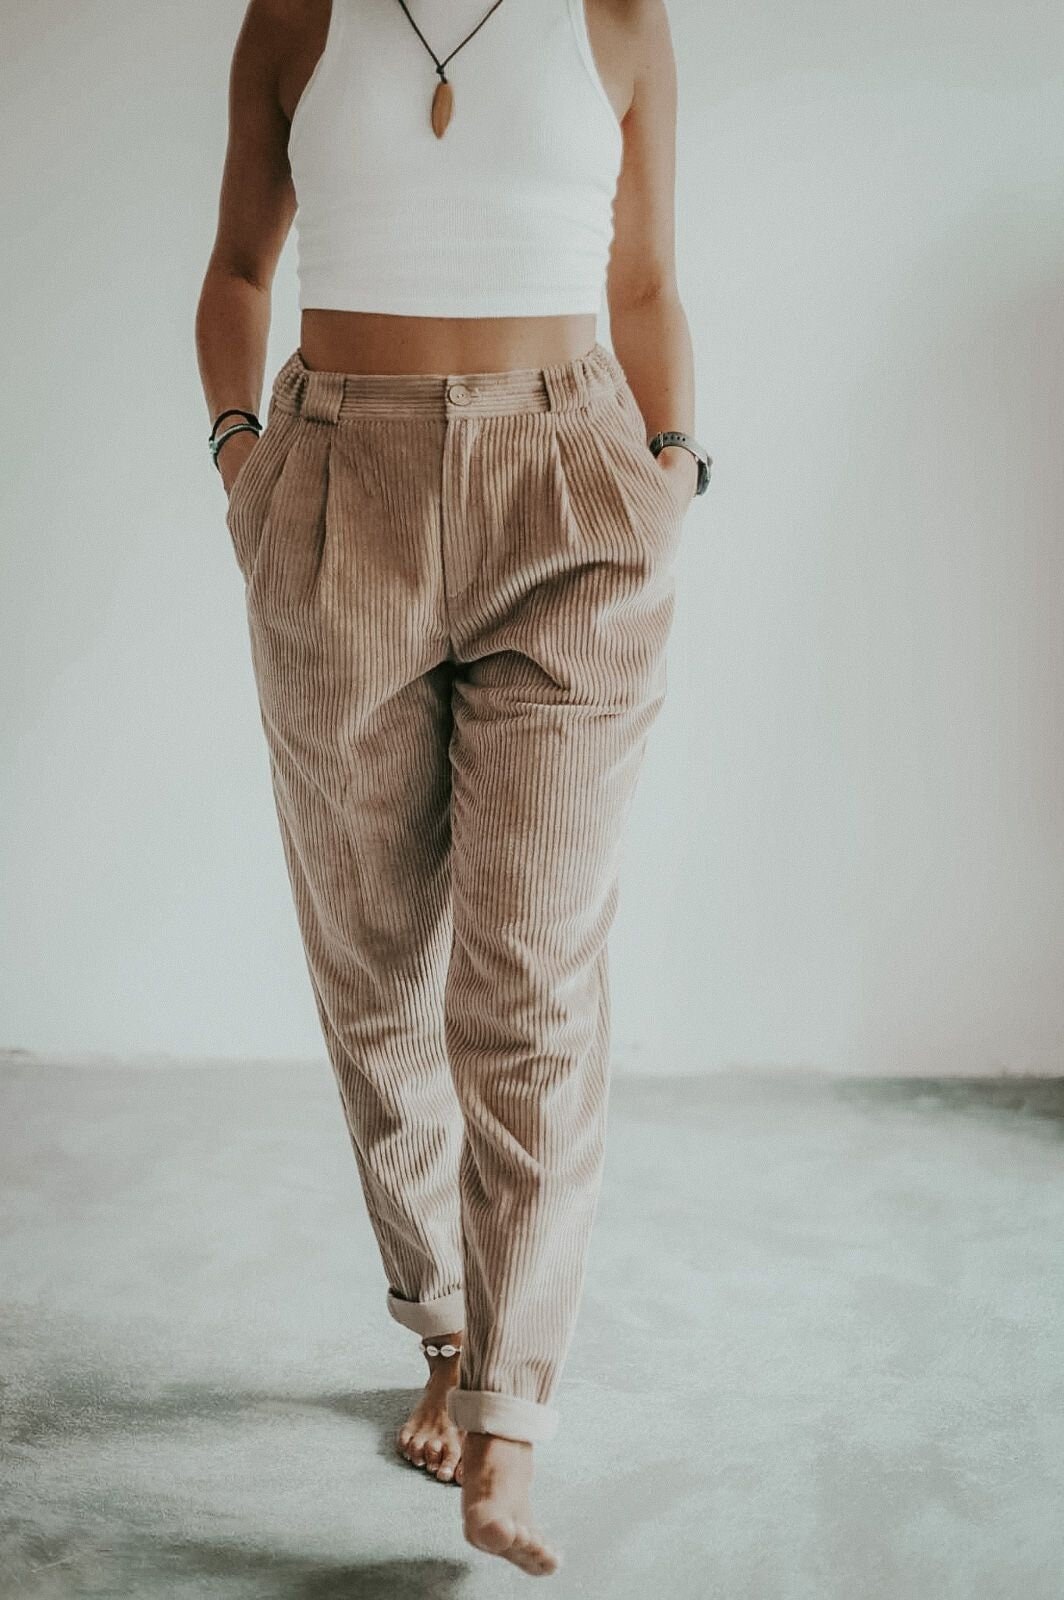 Brown Corduroy Pants, High Waist Corduroy Pants Women, Loose Pants, Casual Corduroy  Pants, Plus Size Pants, Custom Pants C2432 